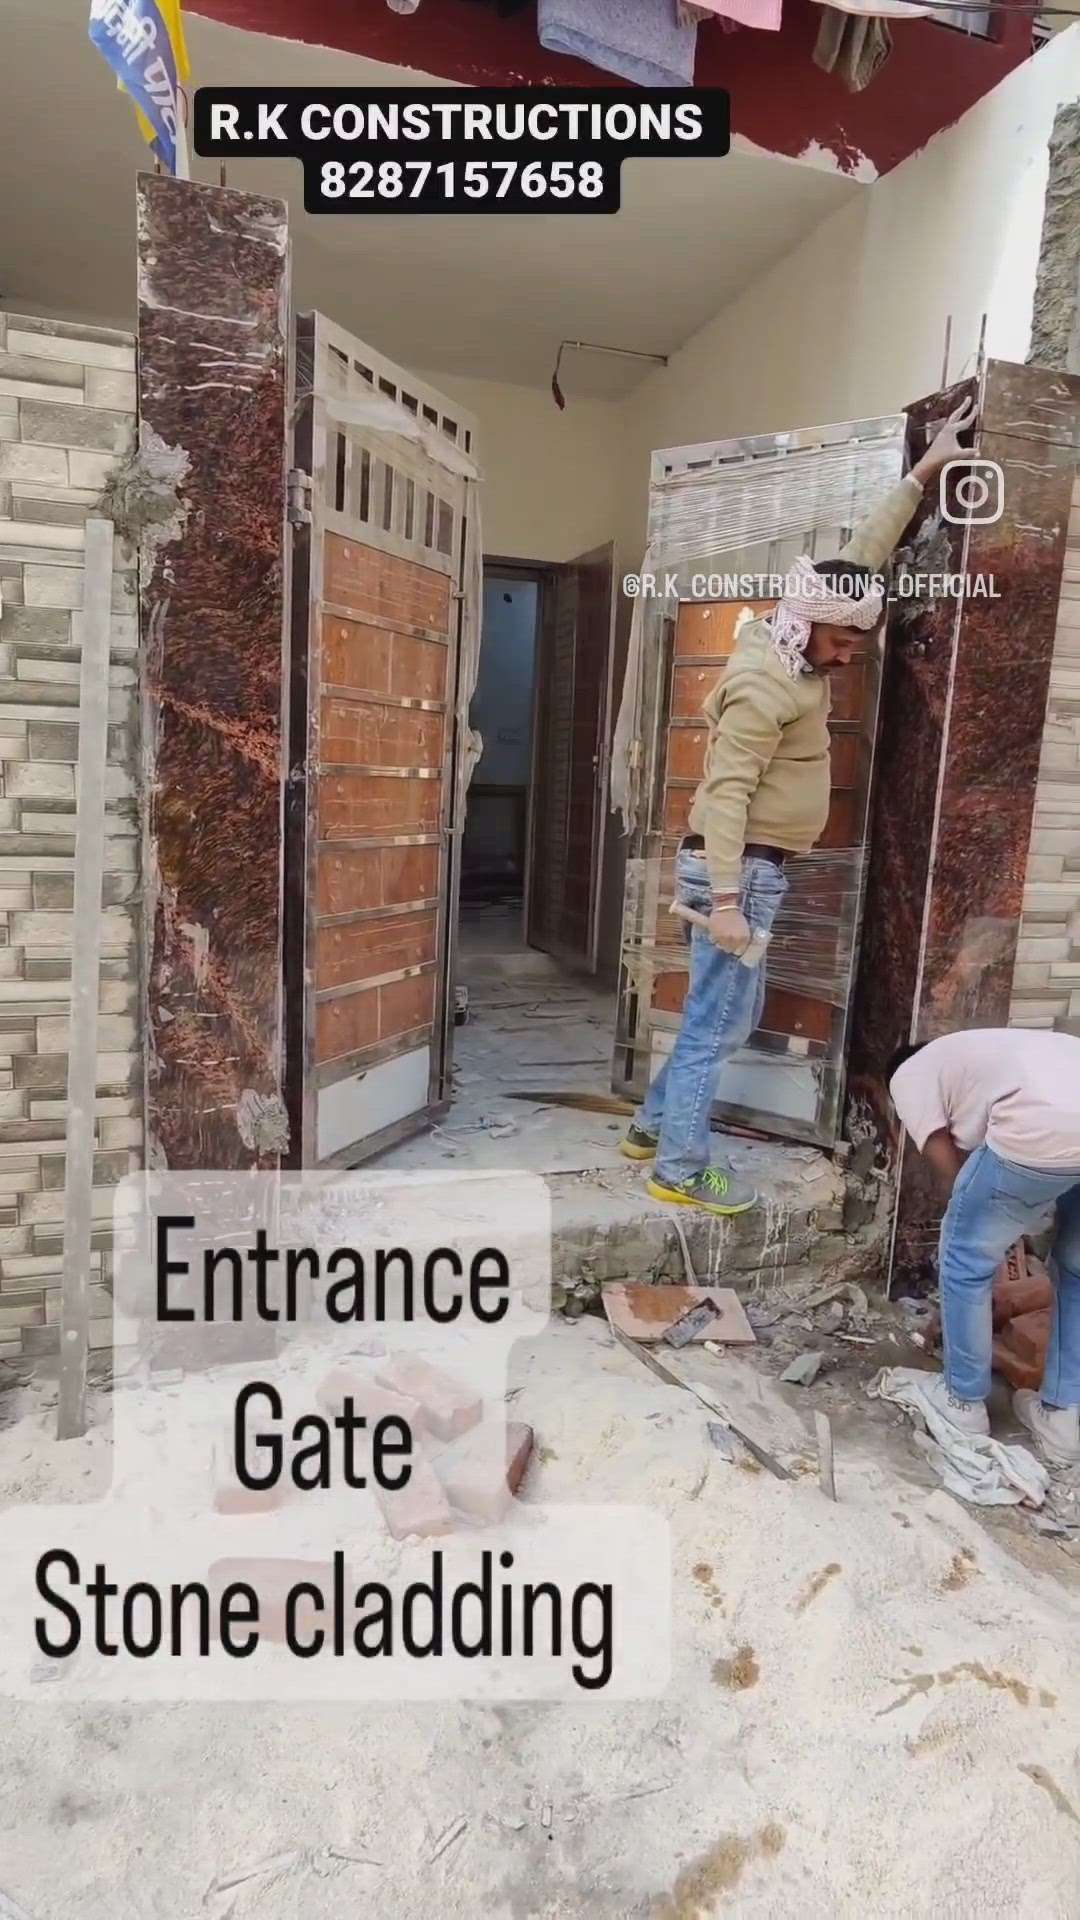 Entrance gate 
#stonecladding #teamwork #HouseRenovation 

contact :- 8287157658